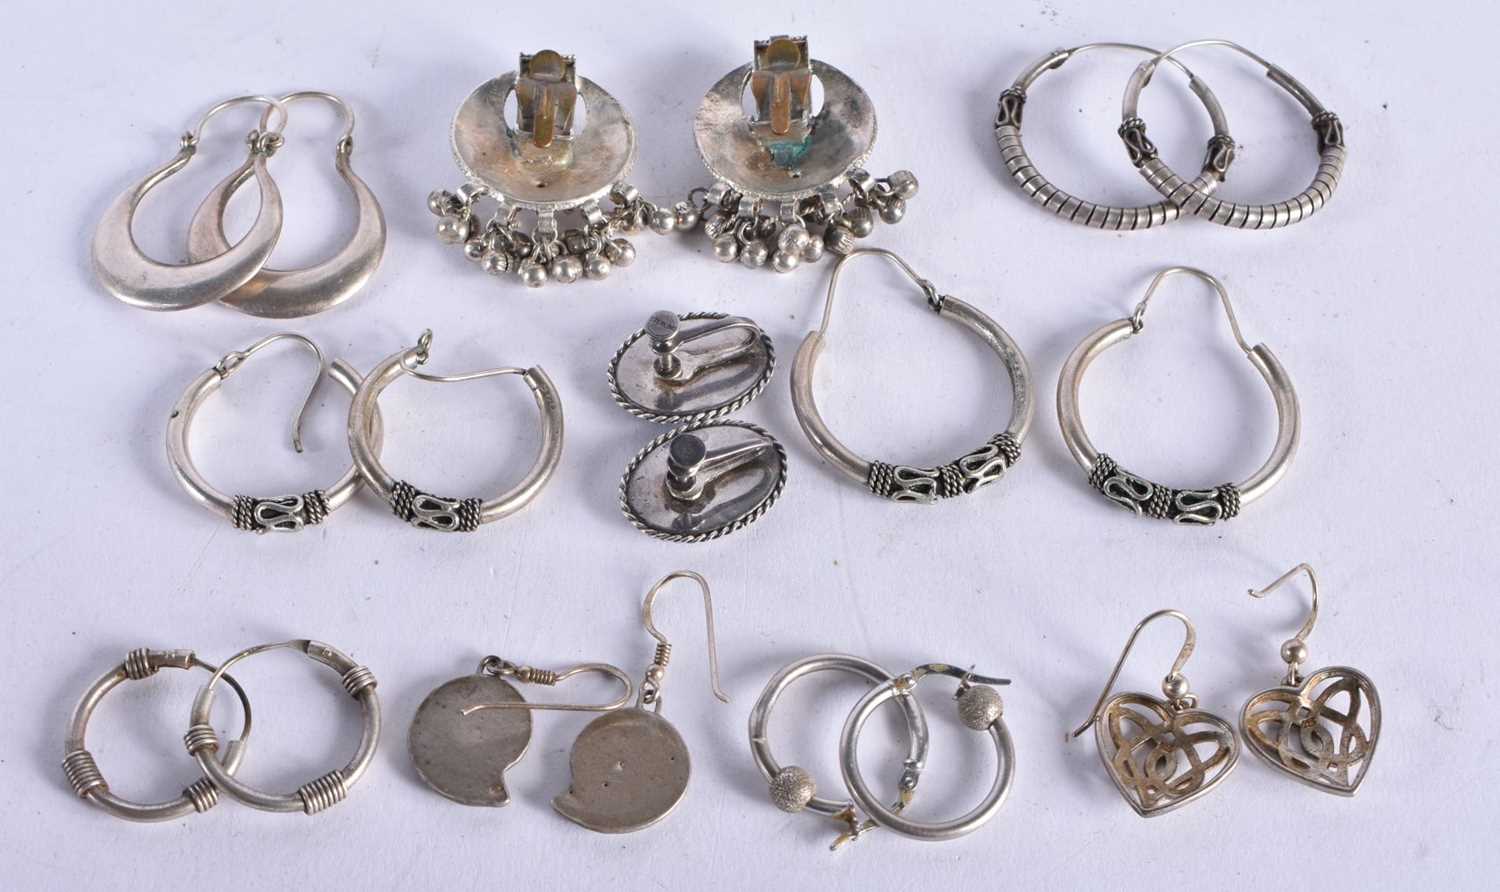 Ten Pairs of Silver Earrings (10) - Image 2 of 2